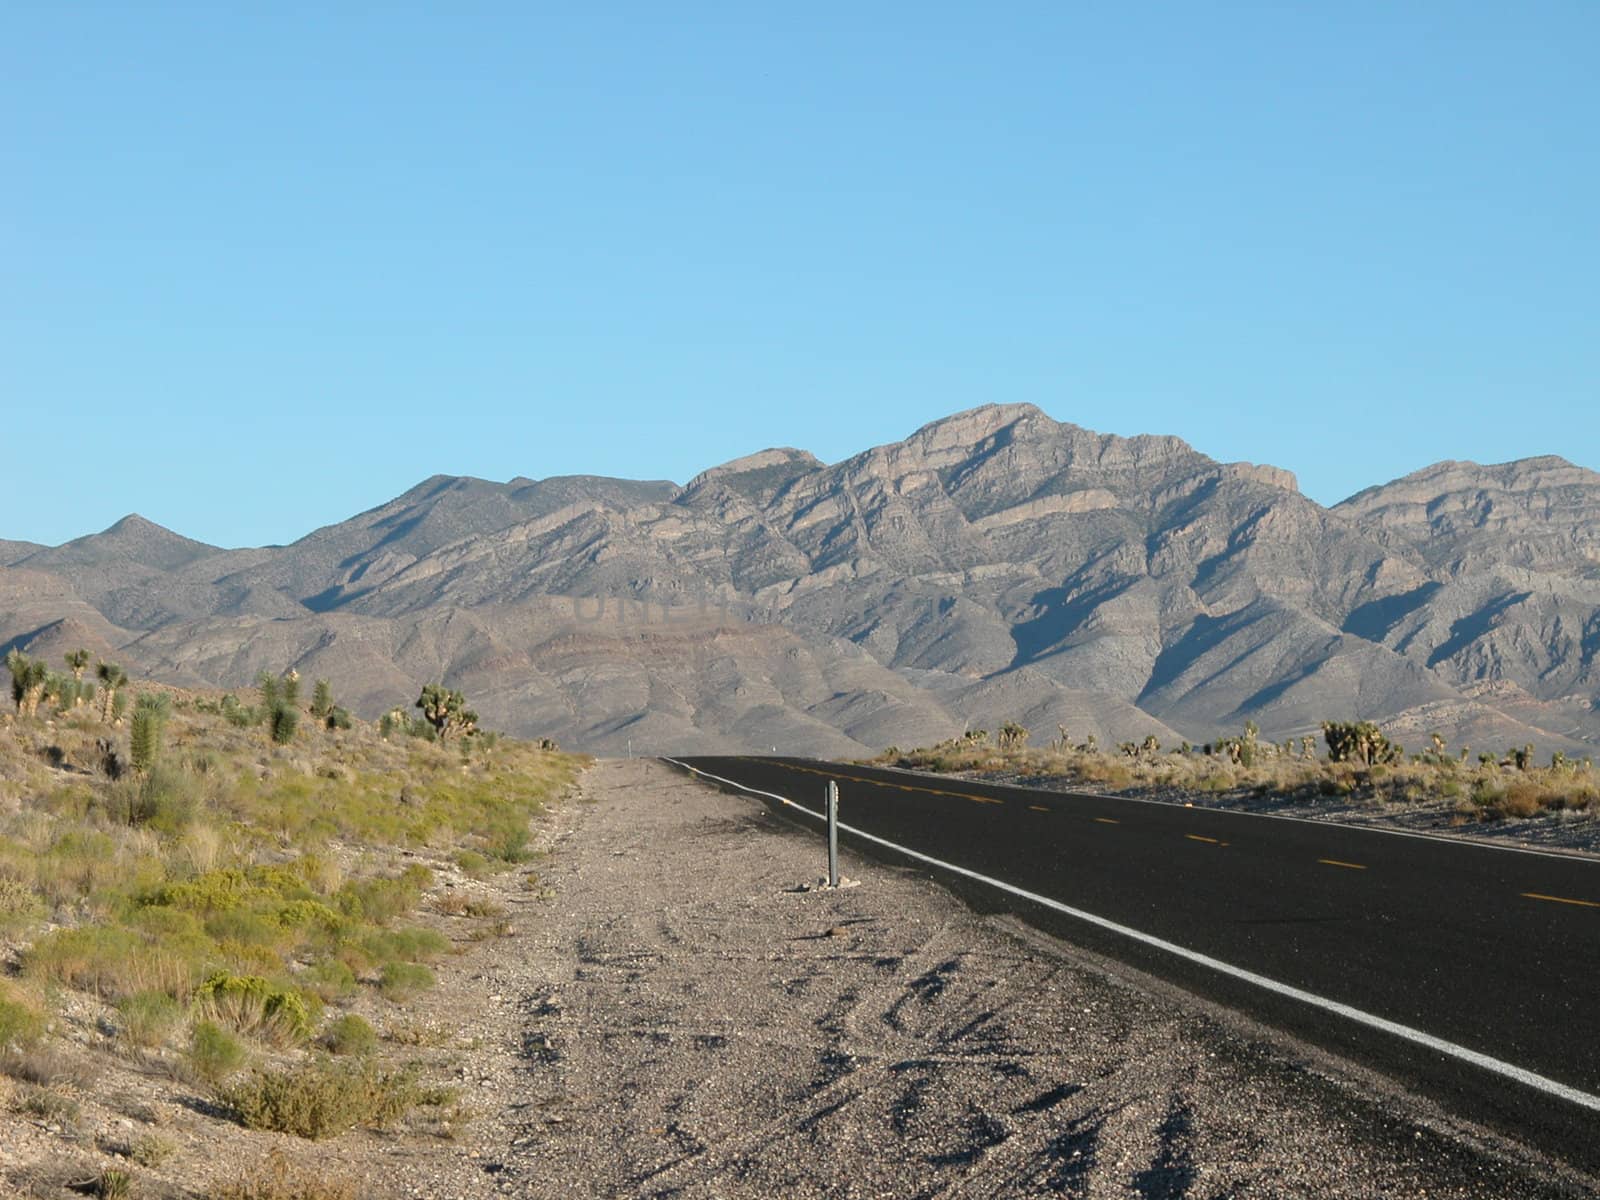 Nevada Highway, 2005 by jovannig